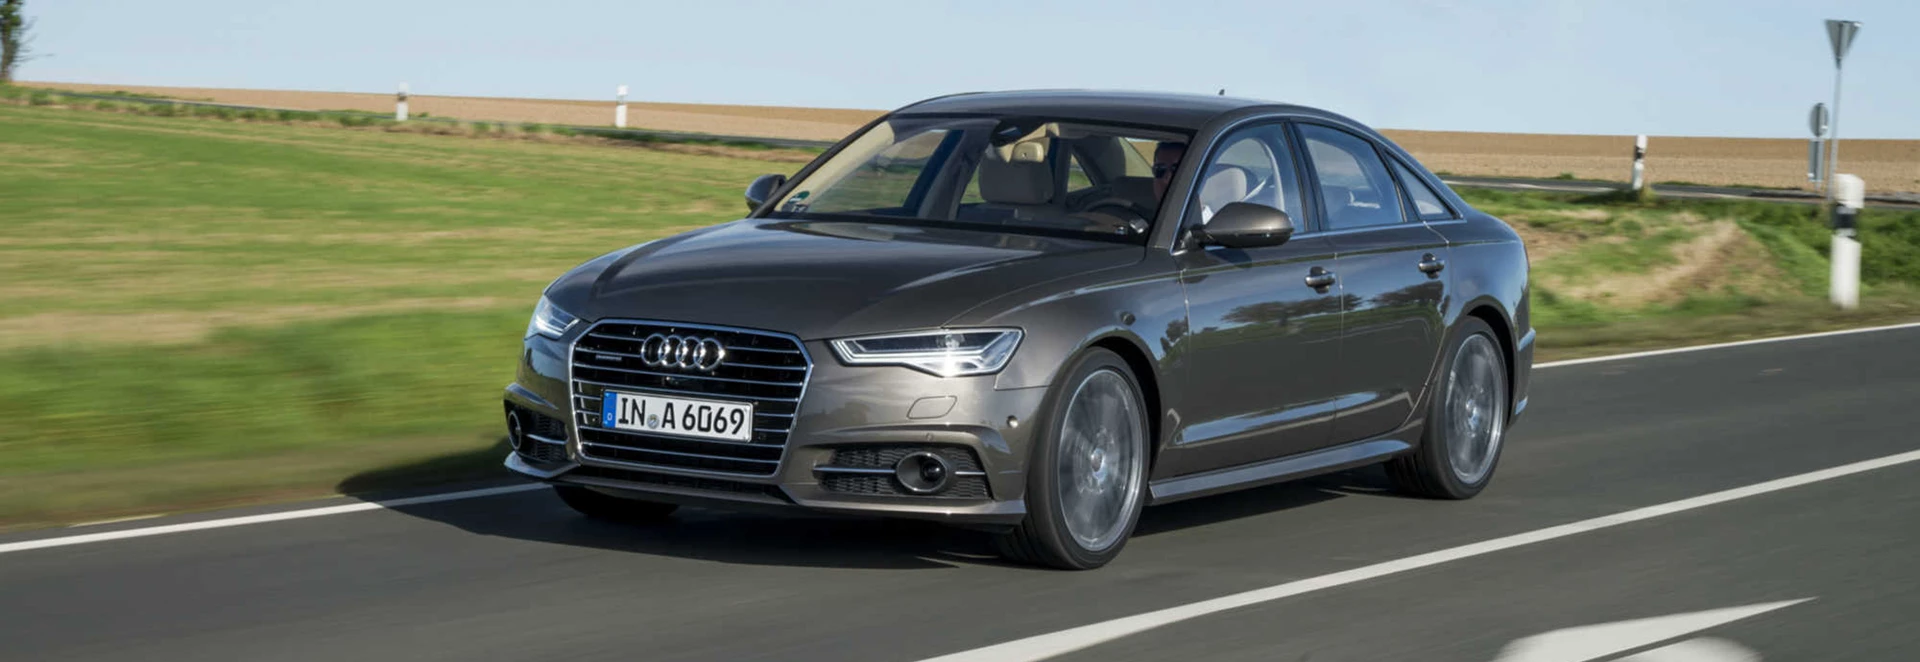 Audi A6 saloon review 